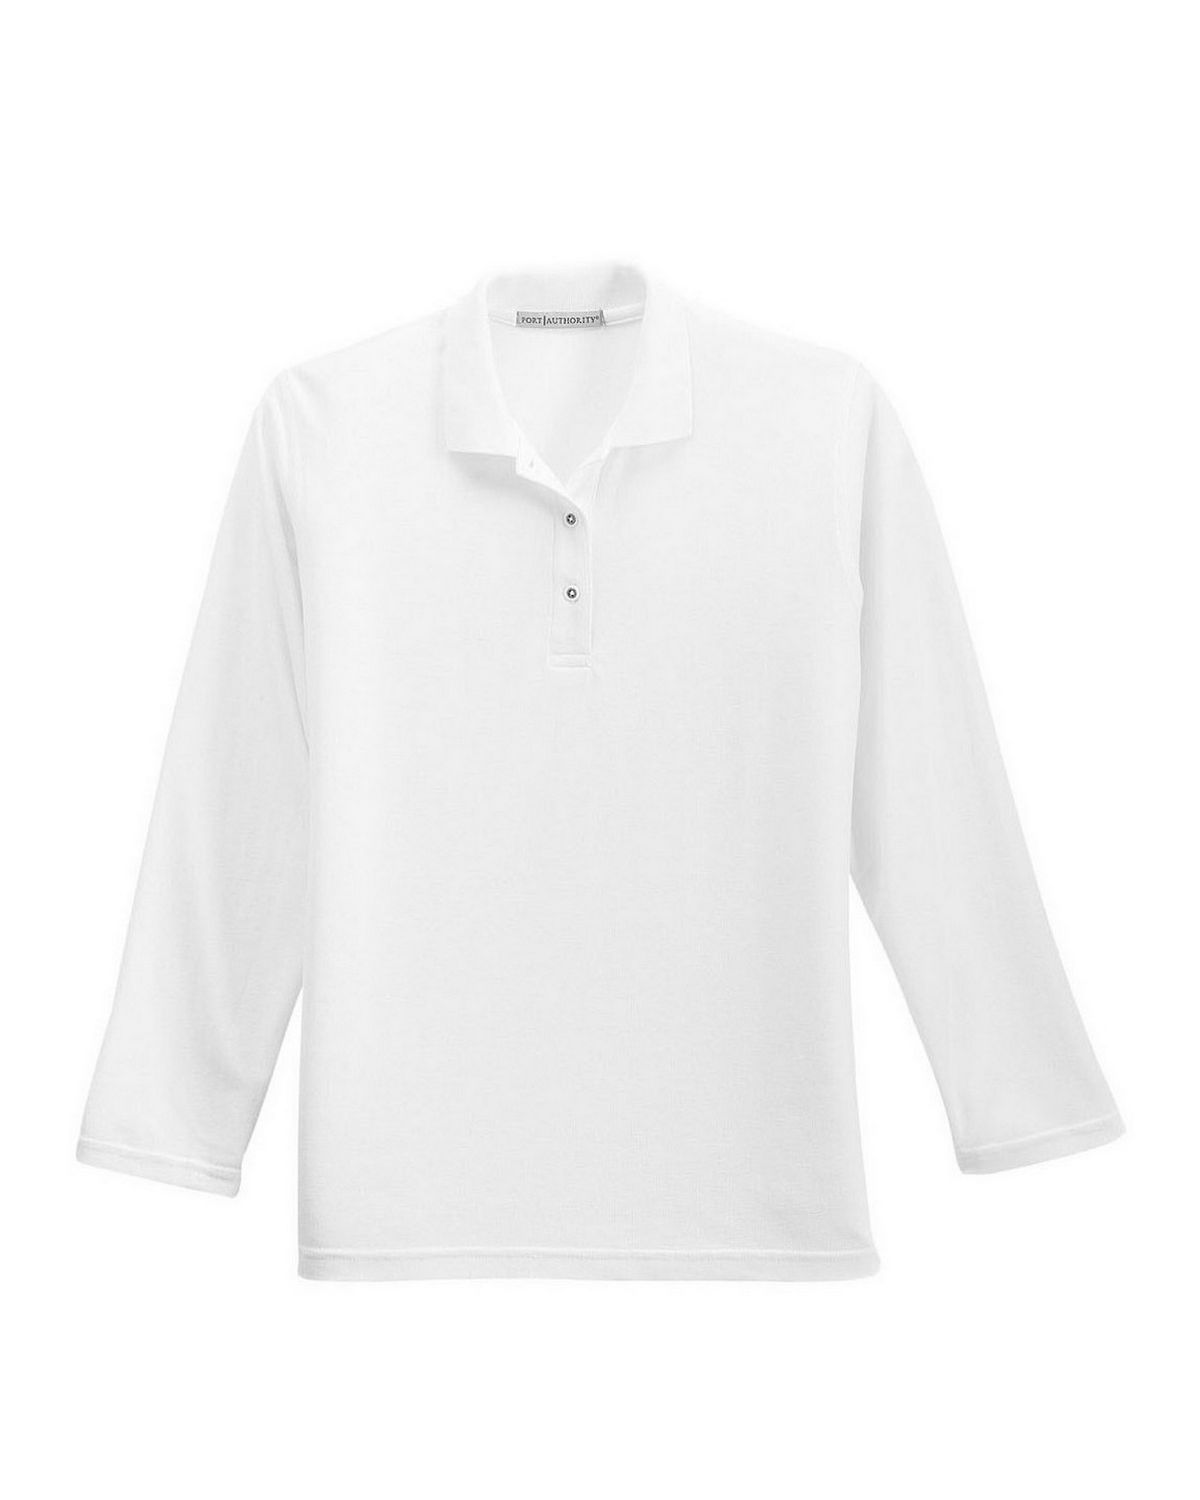 women's long sleeve polo style shirts